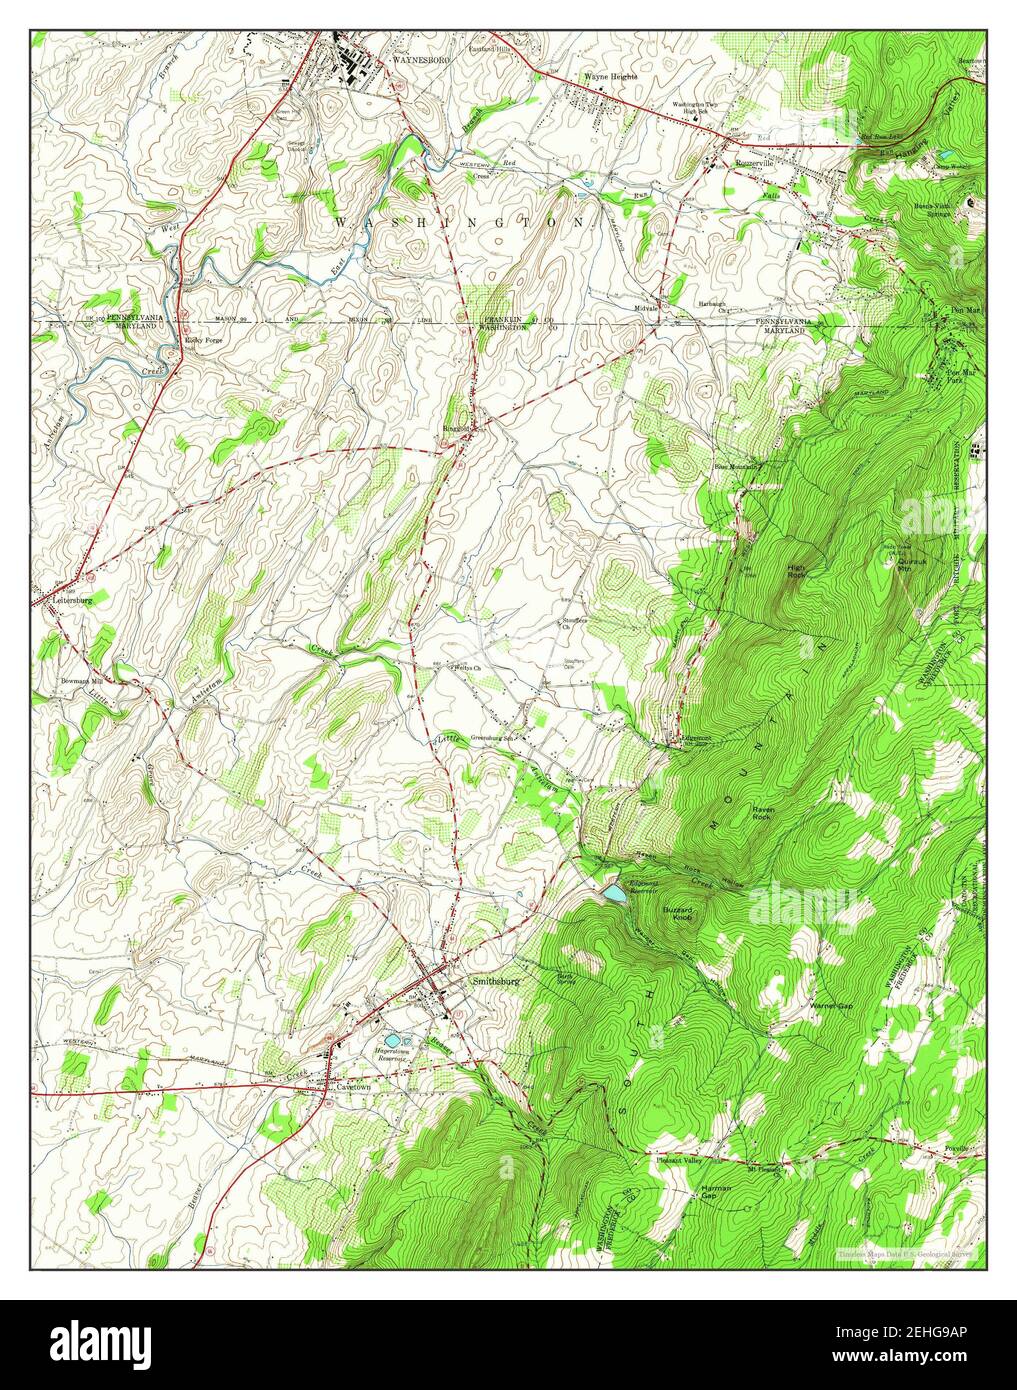 Smithsburg, Maryland, map 1953, 1:24000, United States of America by Timeless Maps, data U.S. Geological Survey Stock Photo